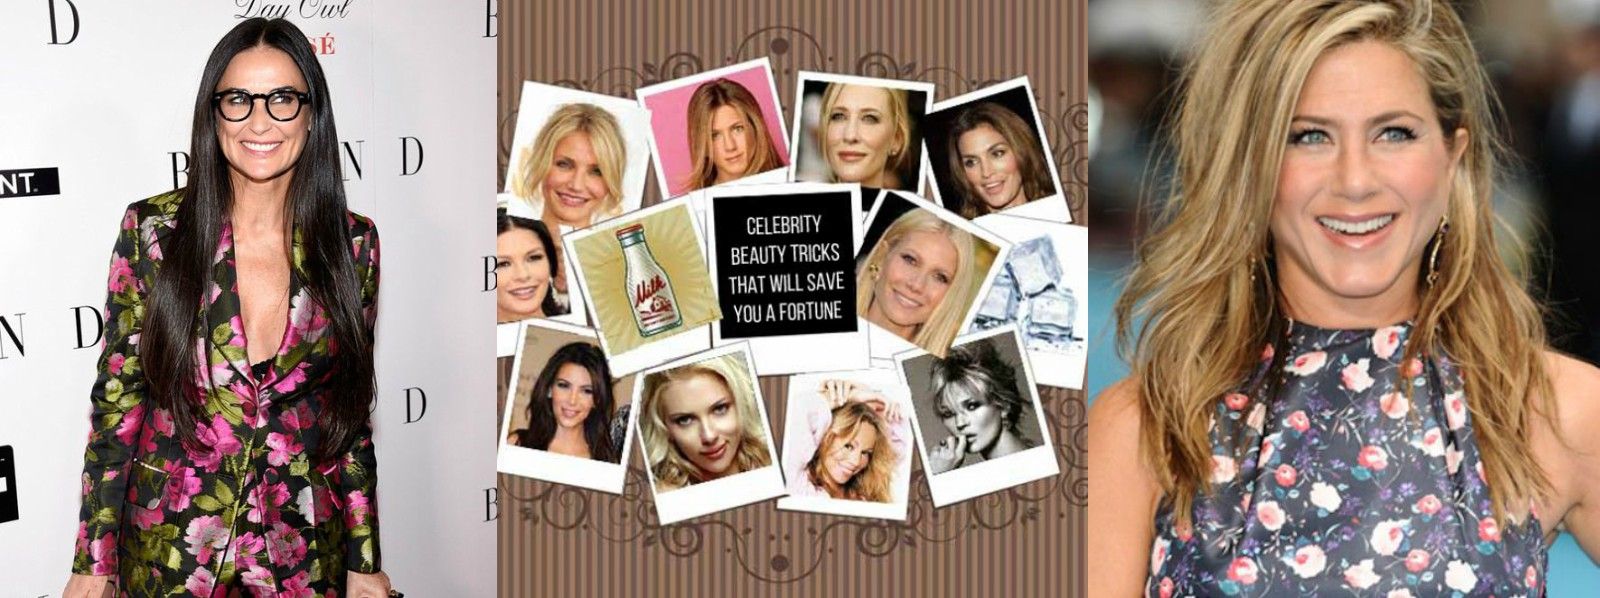 images easyblog articles 2204 celebrities beauty tricks b7dd7ce5